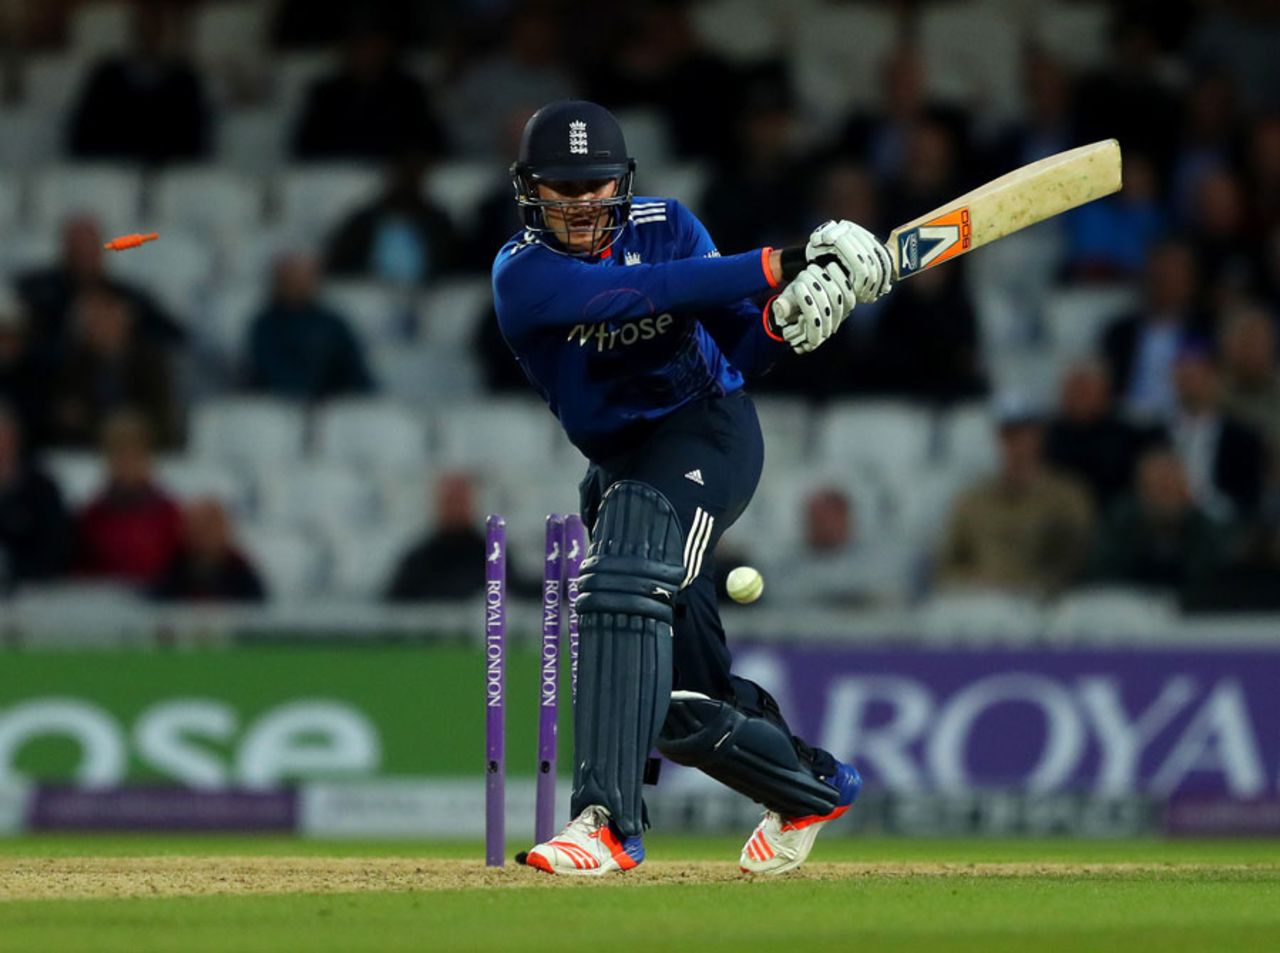 Jason Roy was bowled by a Nuwan Pradeep slower ball for 162, England v Sri Lanka, 4th ODI, The Oval, June 29, 2016